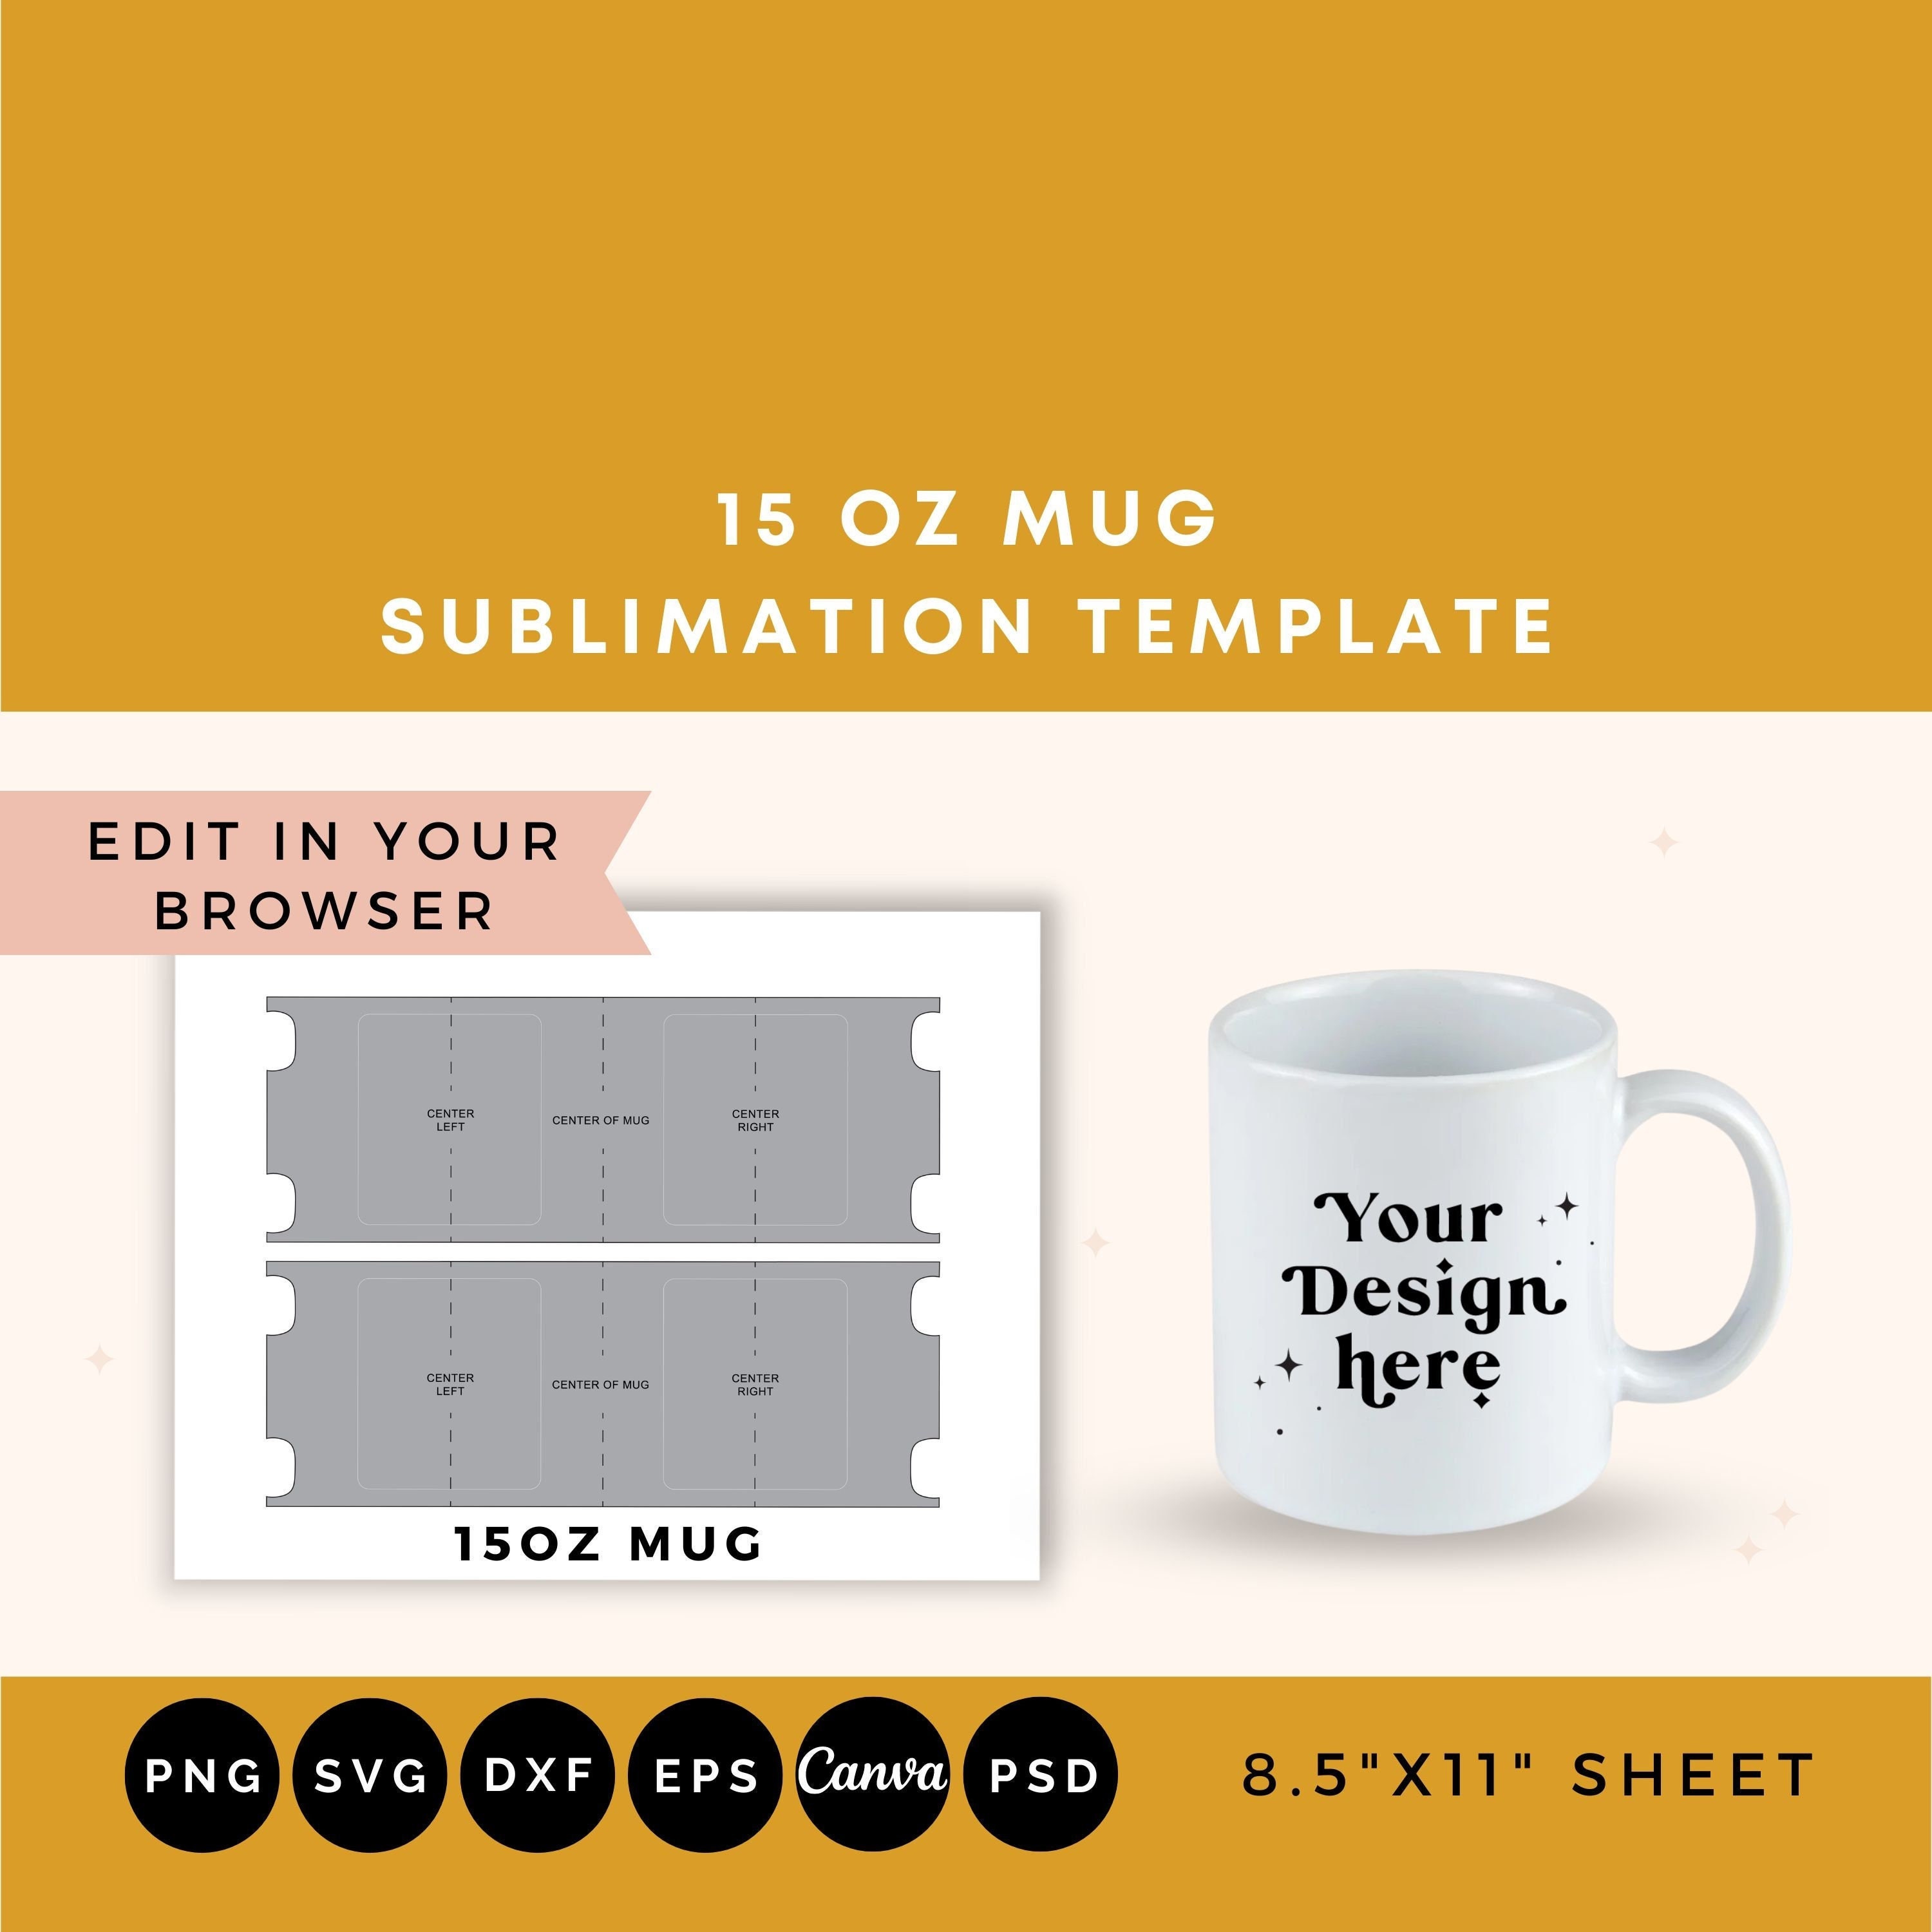 15 Oz Mug Sublimation Template, Mug SVG, Sublimation Template, Template for  Sublimation, 15oz Mug Full Wrap Template, Mug SVG Template 